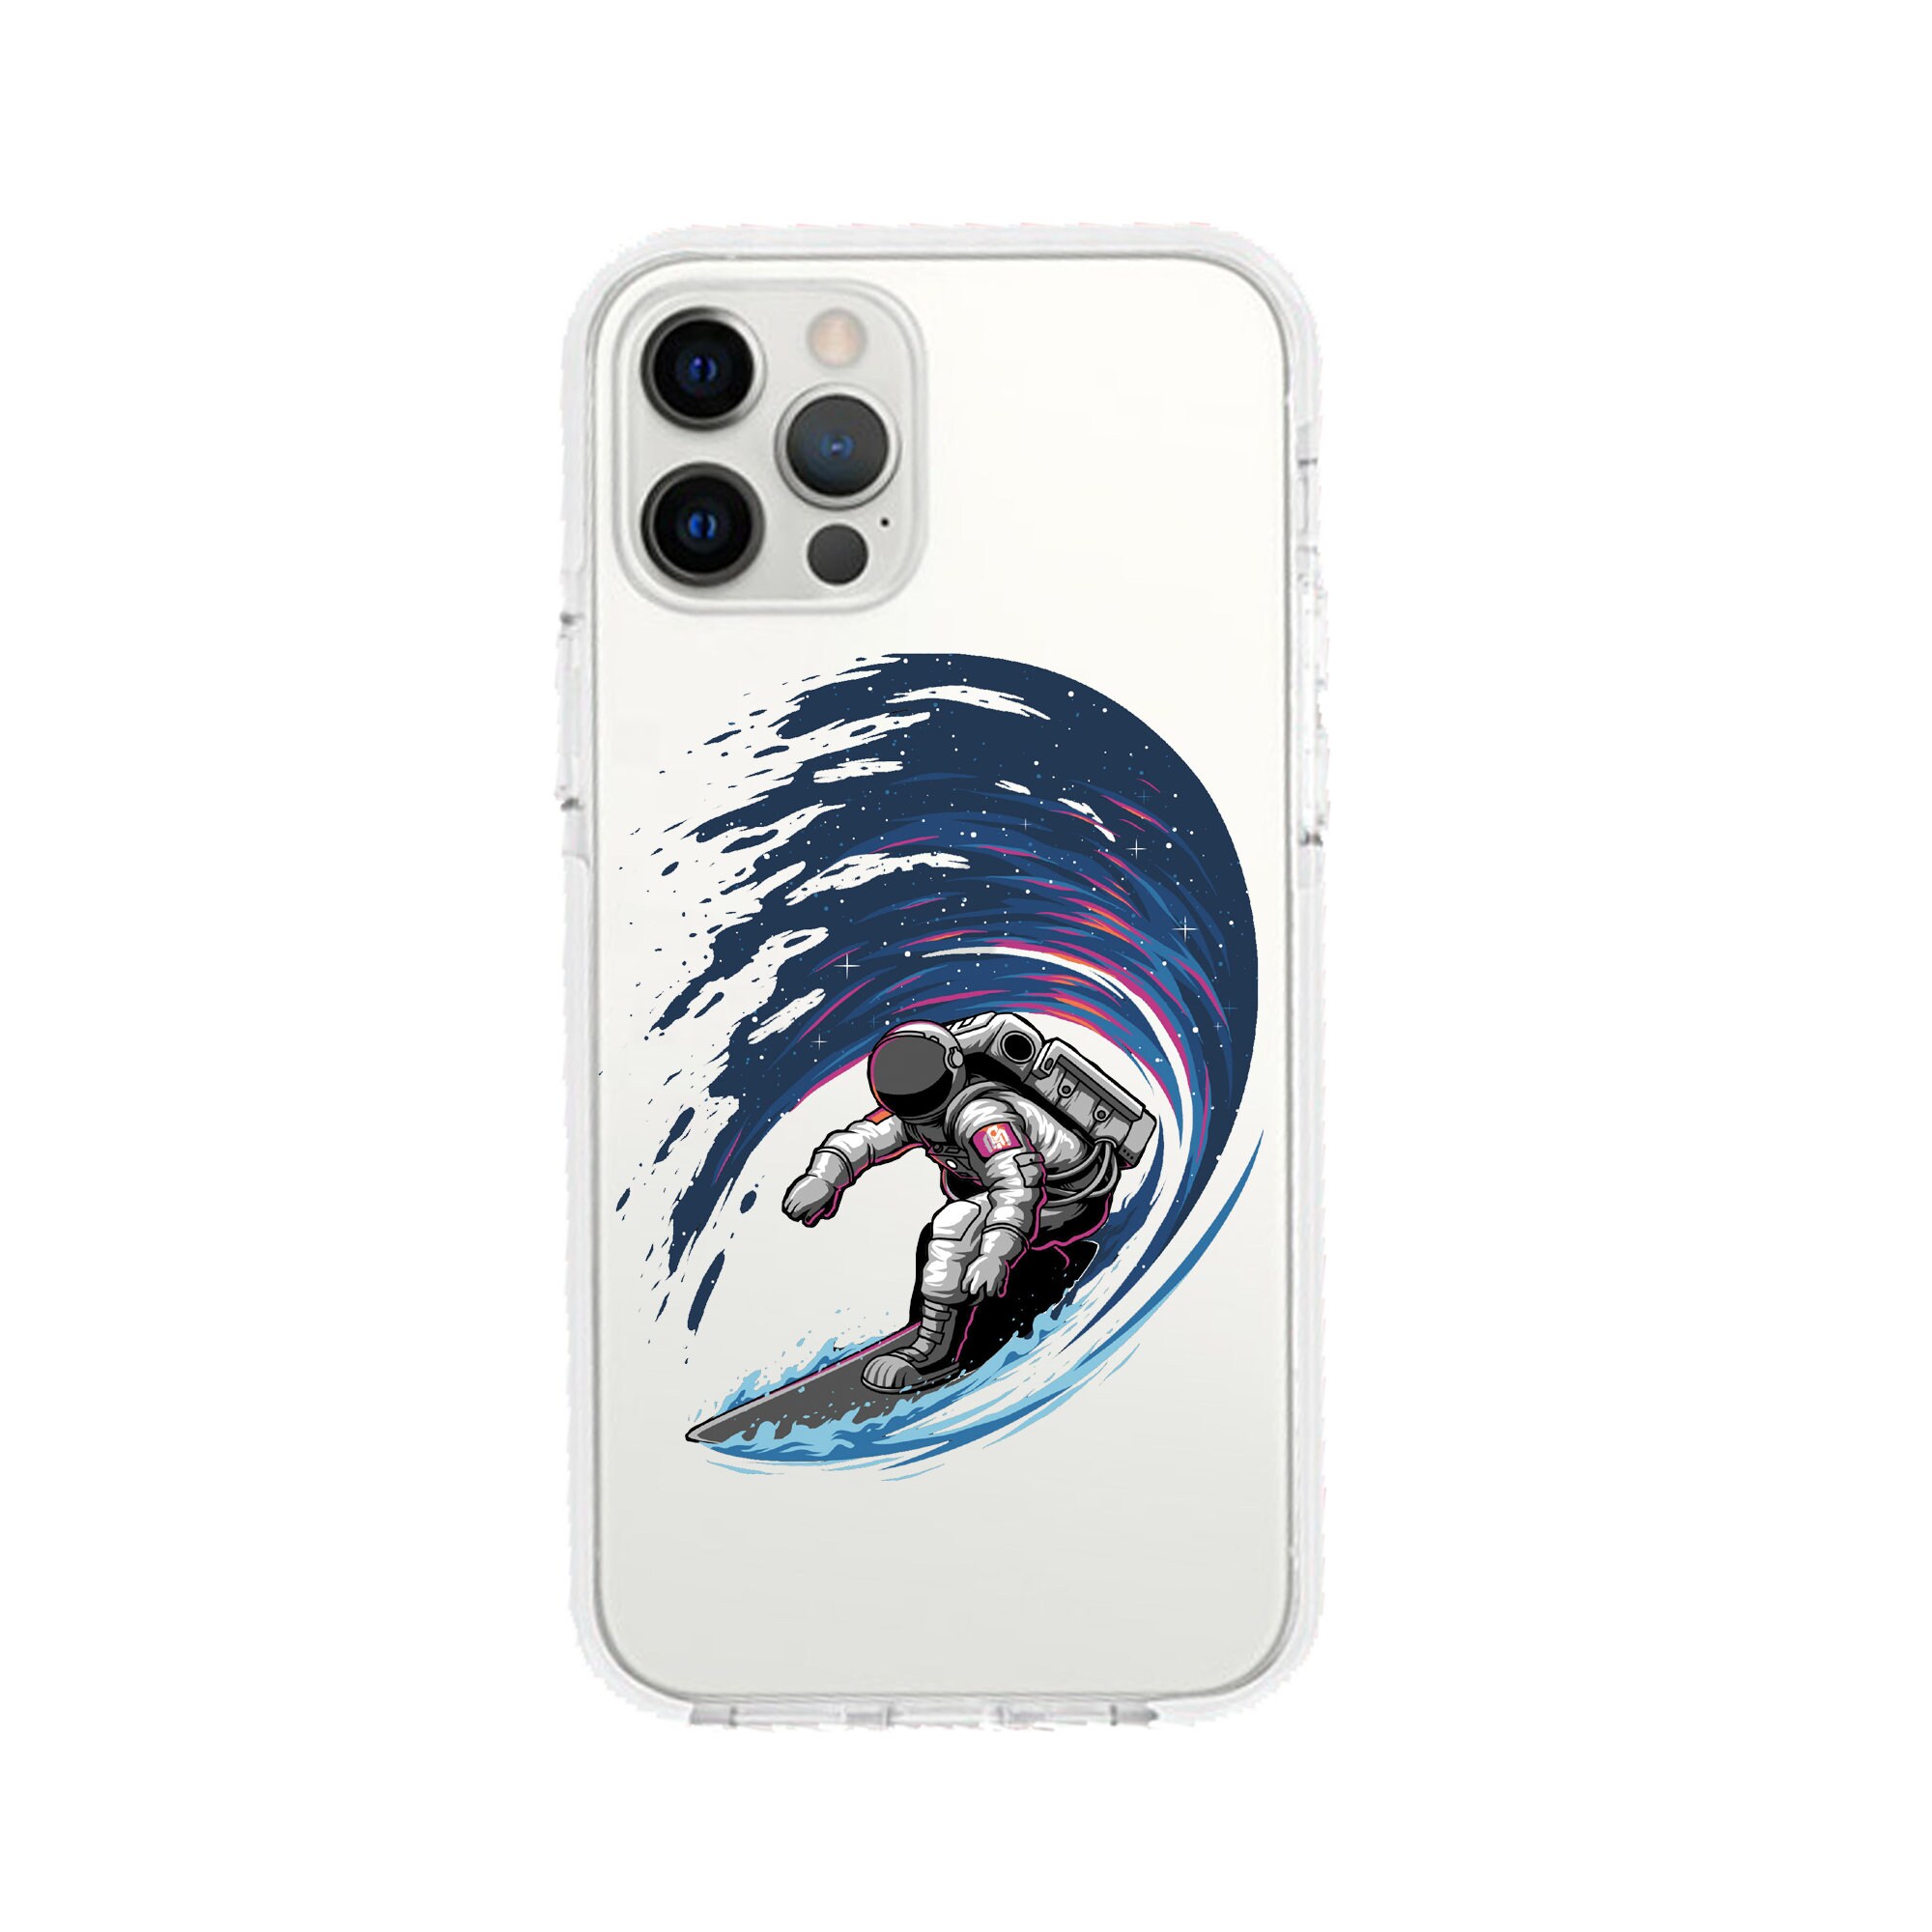 Discover Capa De Telemóvel Iphone Astronauta Desenho | Surfer Astronaut iPhone Case Nautical